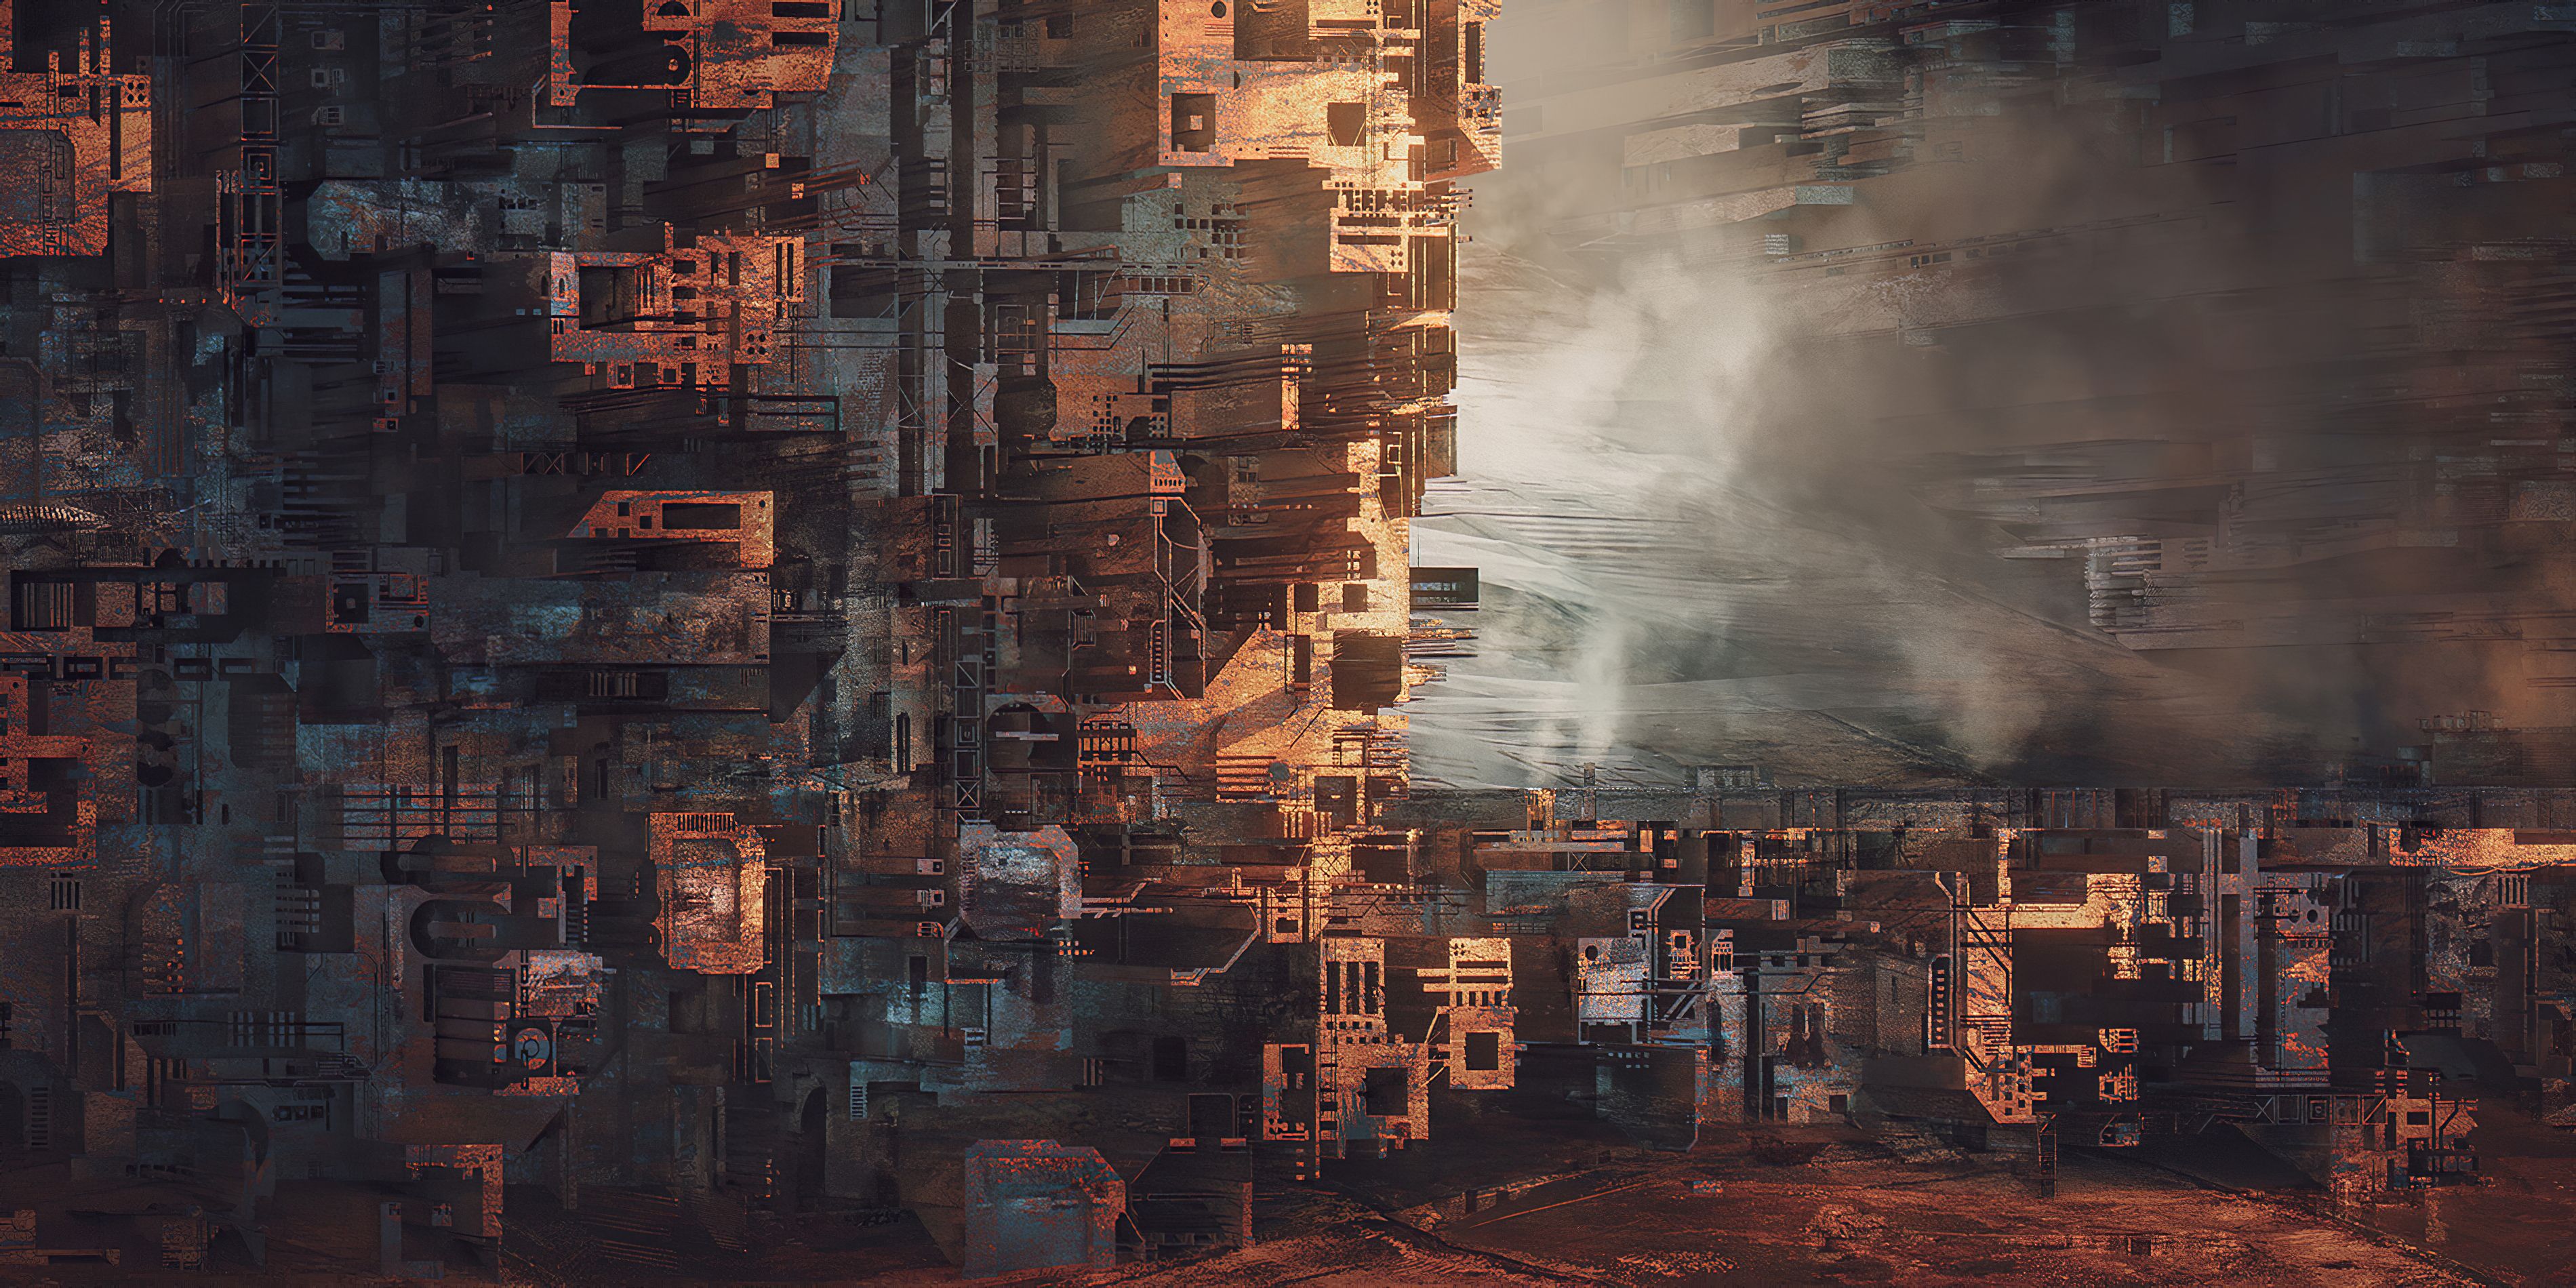 The Underground Slum 4k, HD Artist, 4k Wallpaper, Image, Background, Photo and Picture